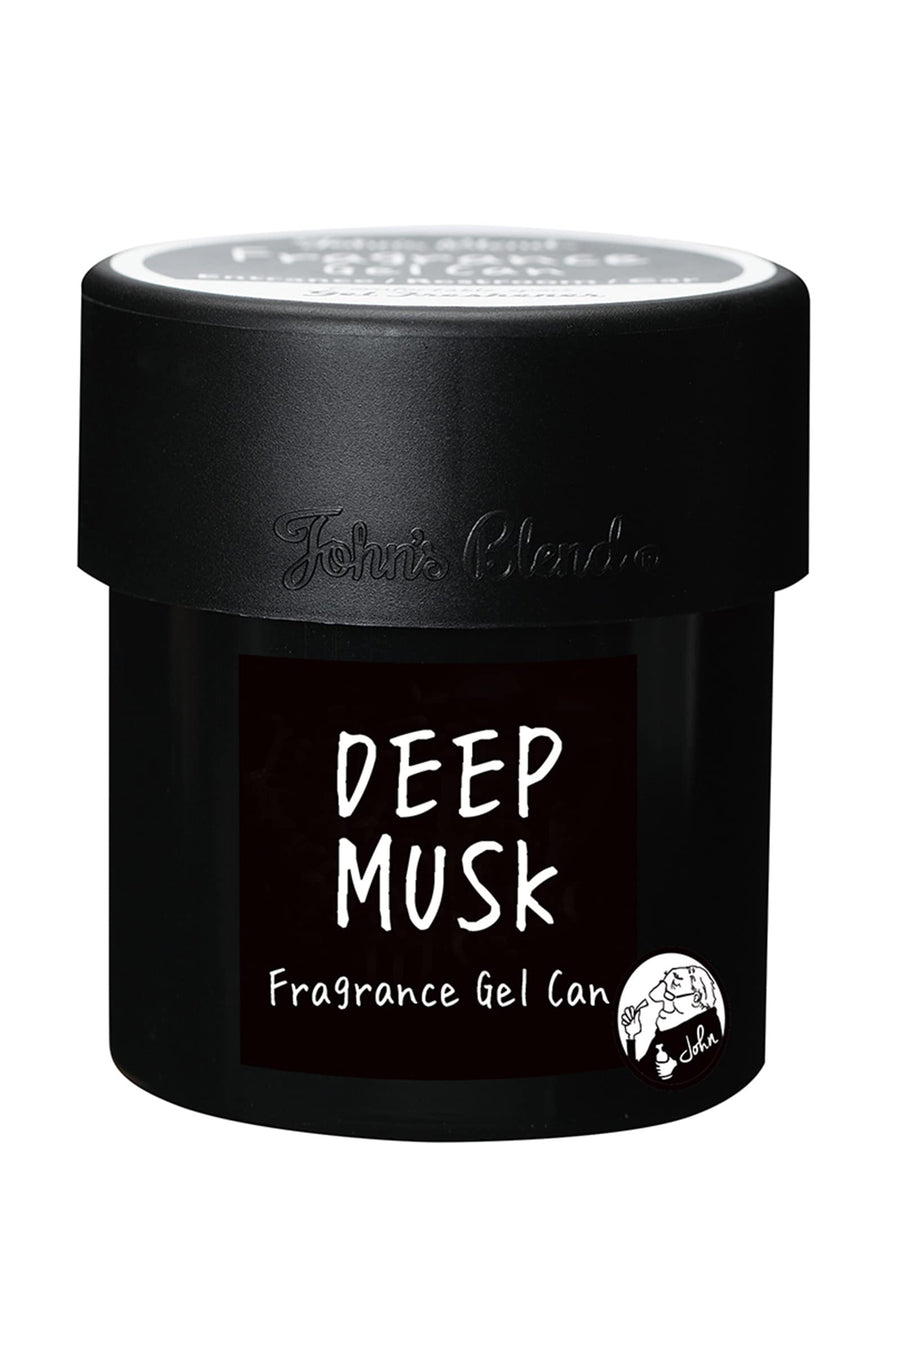 JOHN'S BLEND Fragrance Gel (Black Can Type)- Deep Musk (85g)